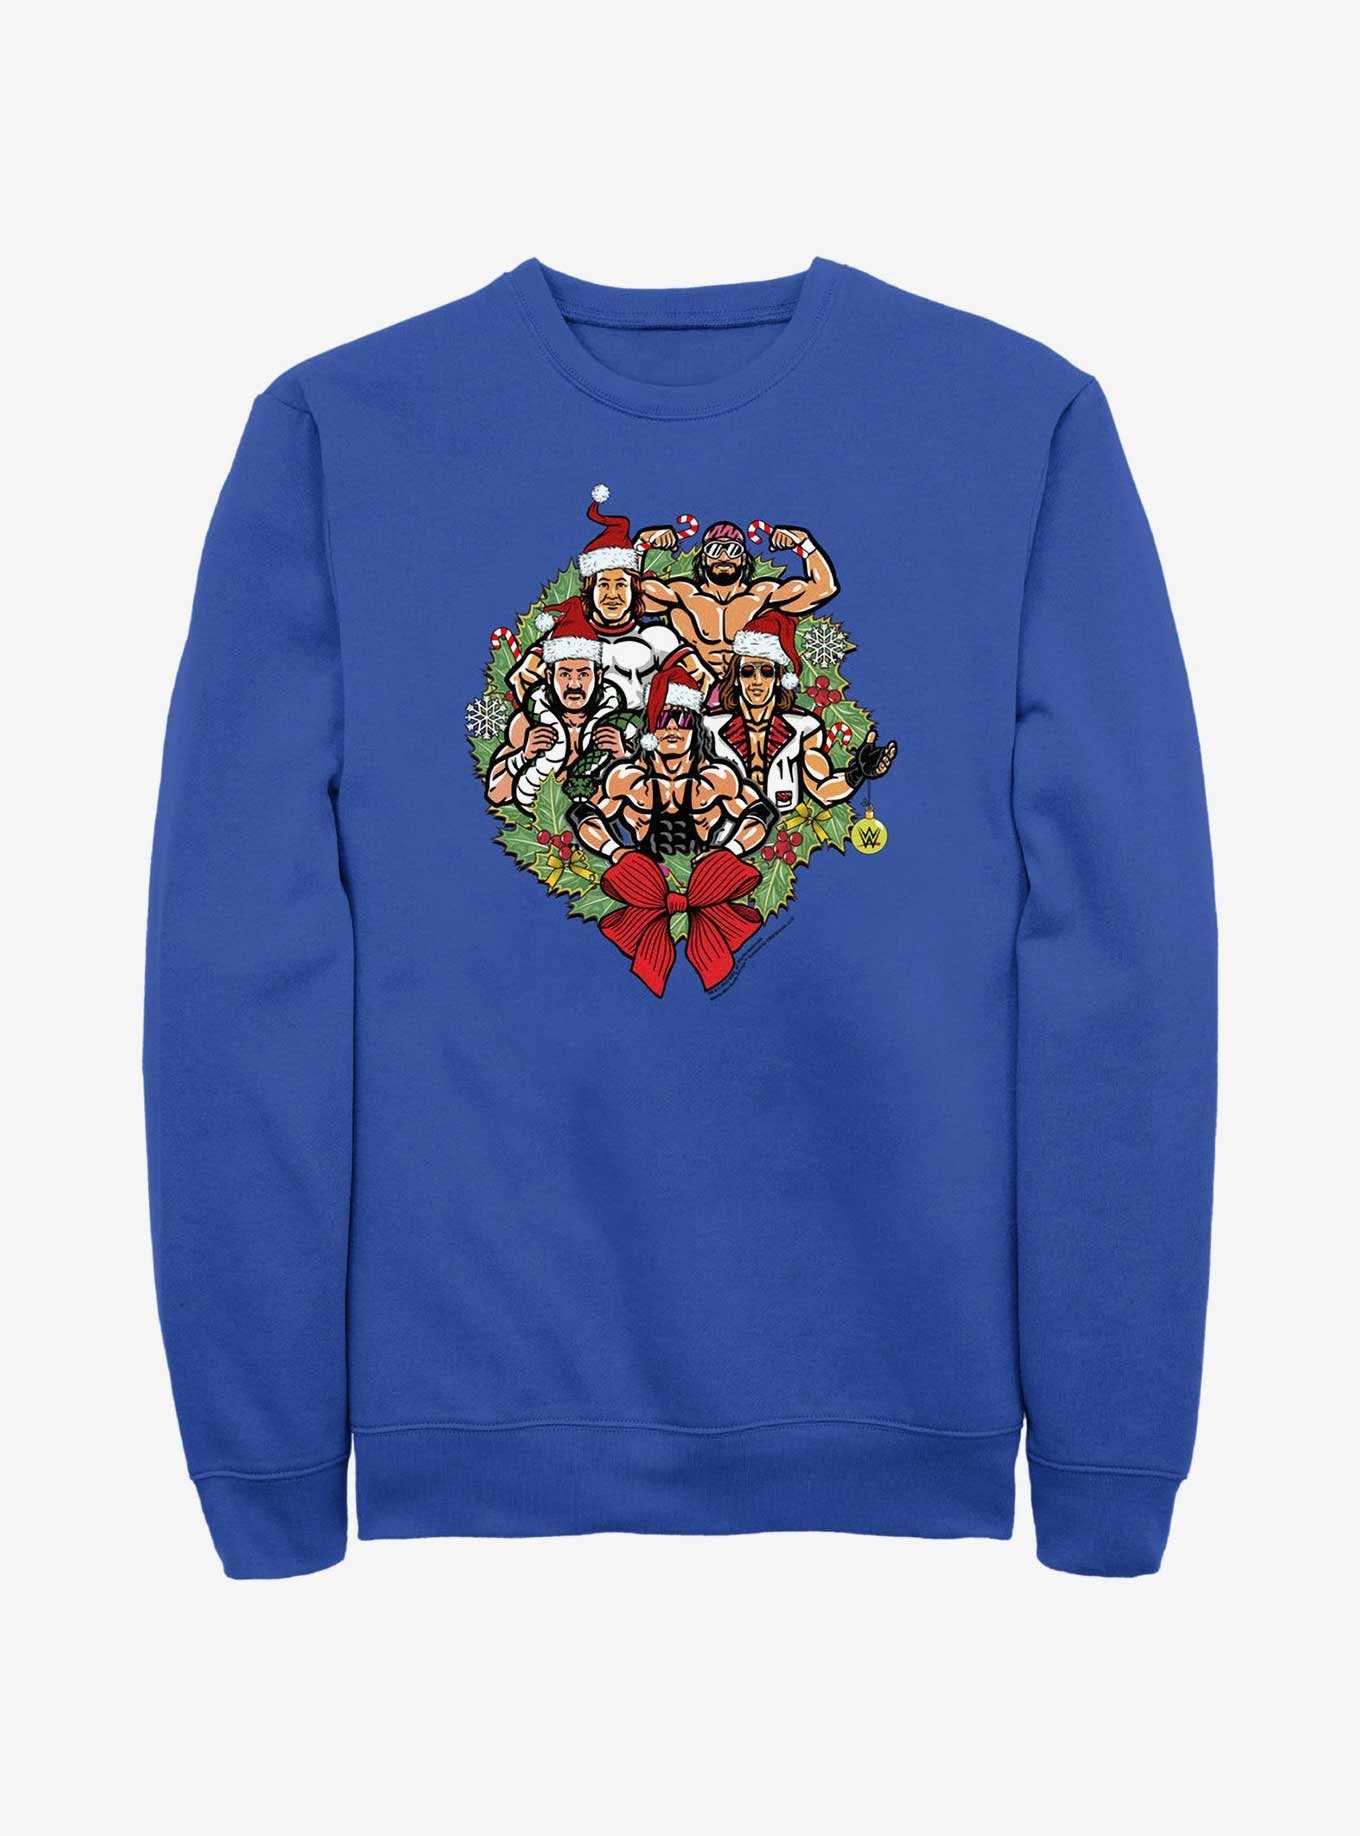 WWE Holiday Legends Wreath Sweatshirt, , hi-res